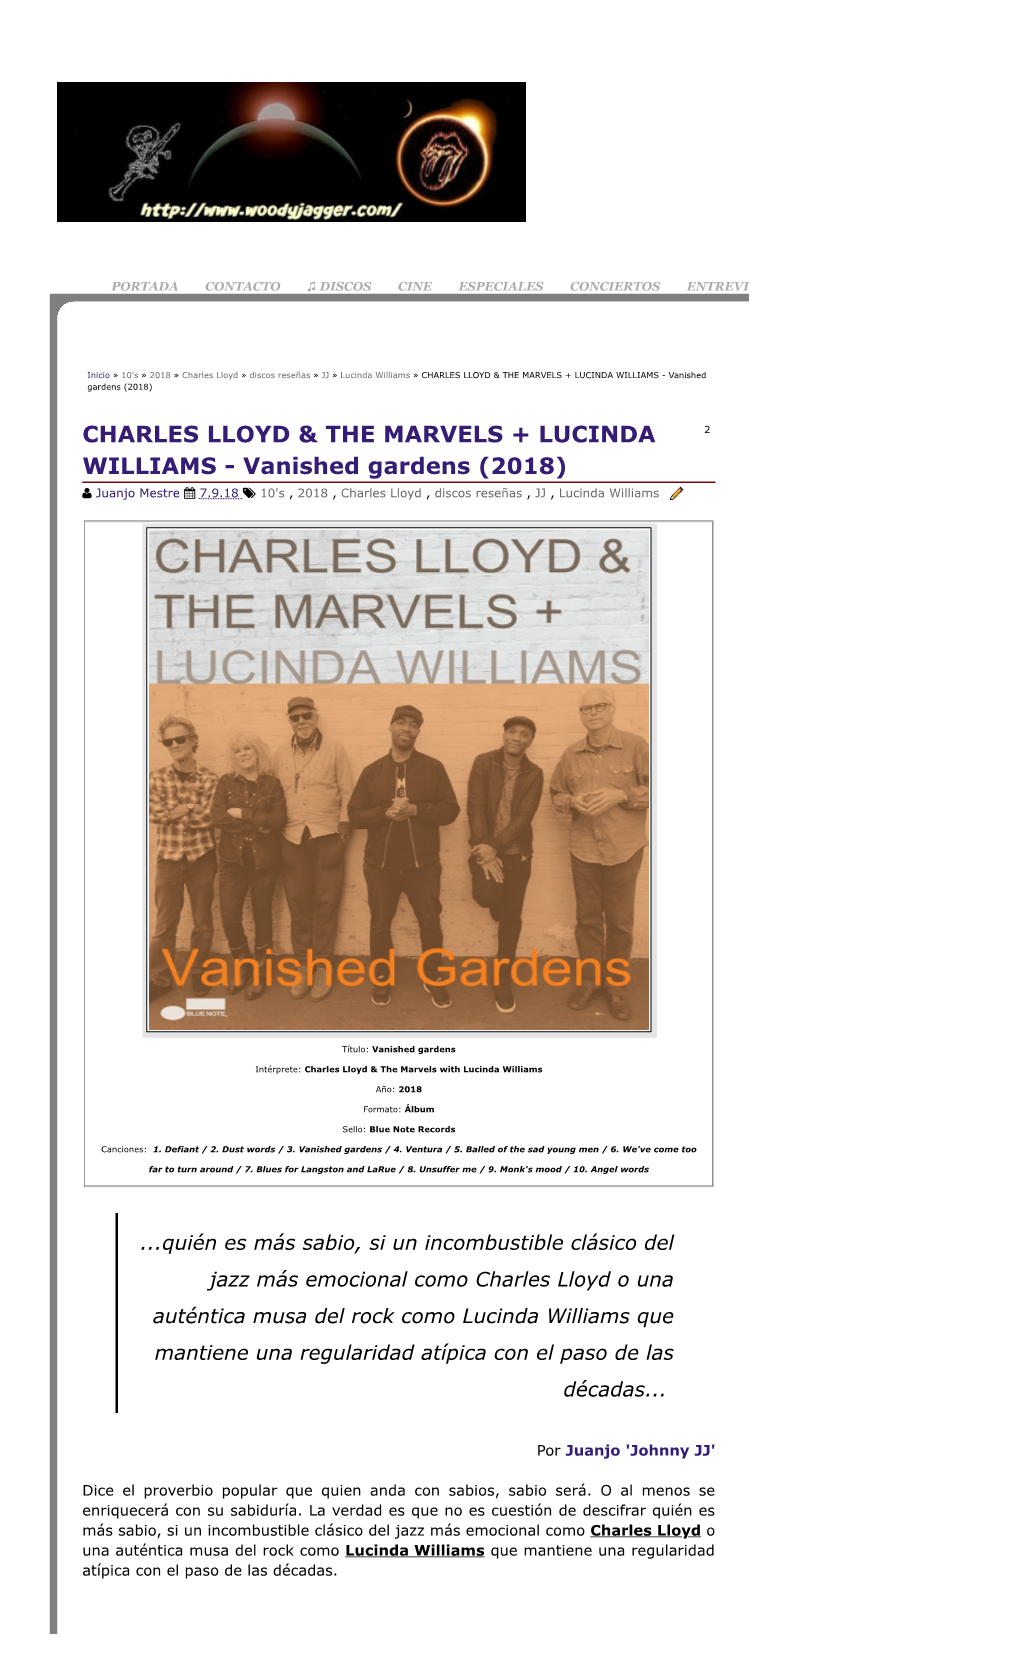 Charles Lloyd & the Marvels + Lucinda Williams